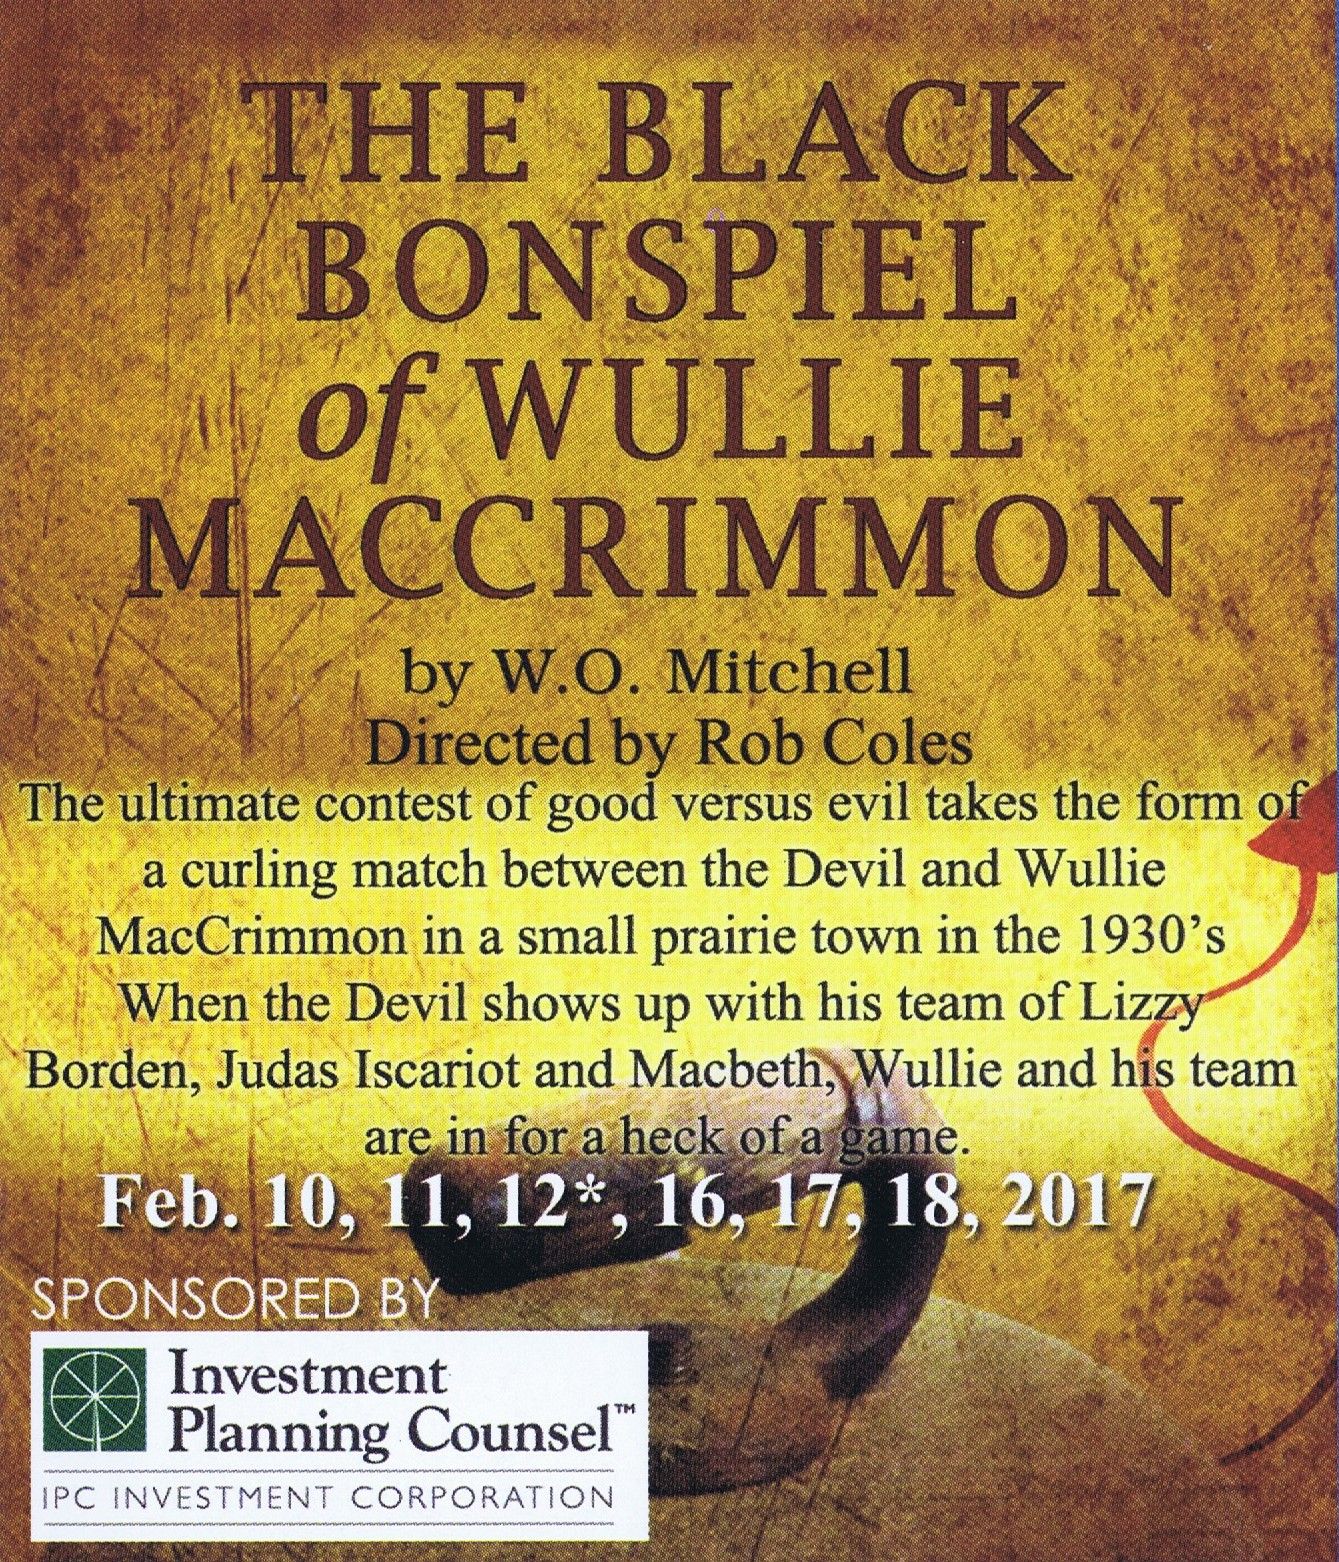 The Black Bonspiel of Wullie MacCrimmon